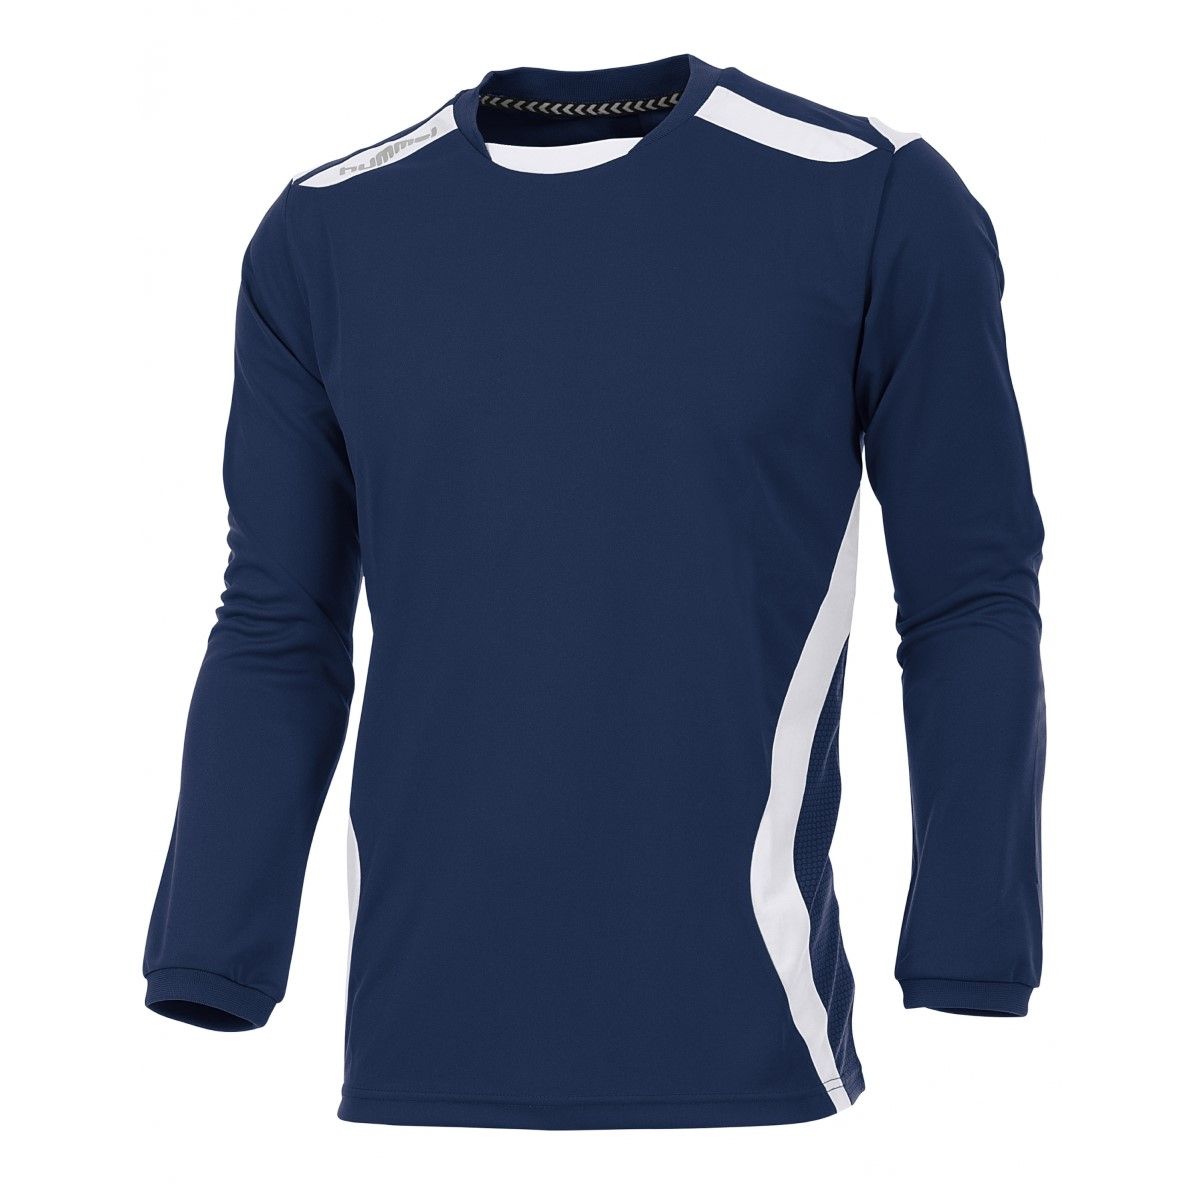 Hummel Club Voetbalshirt online kopen